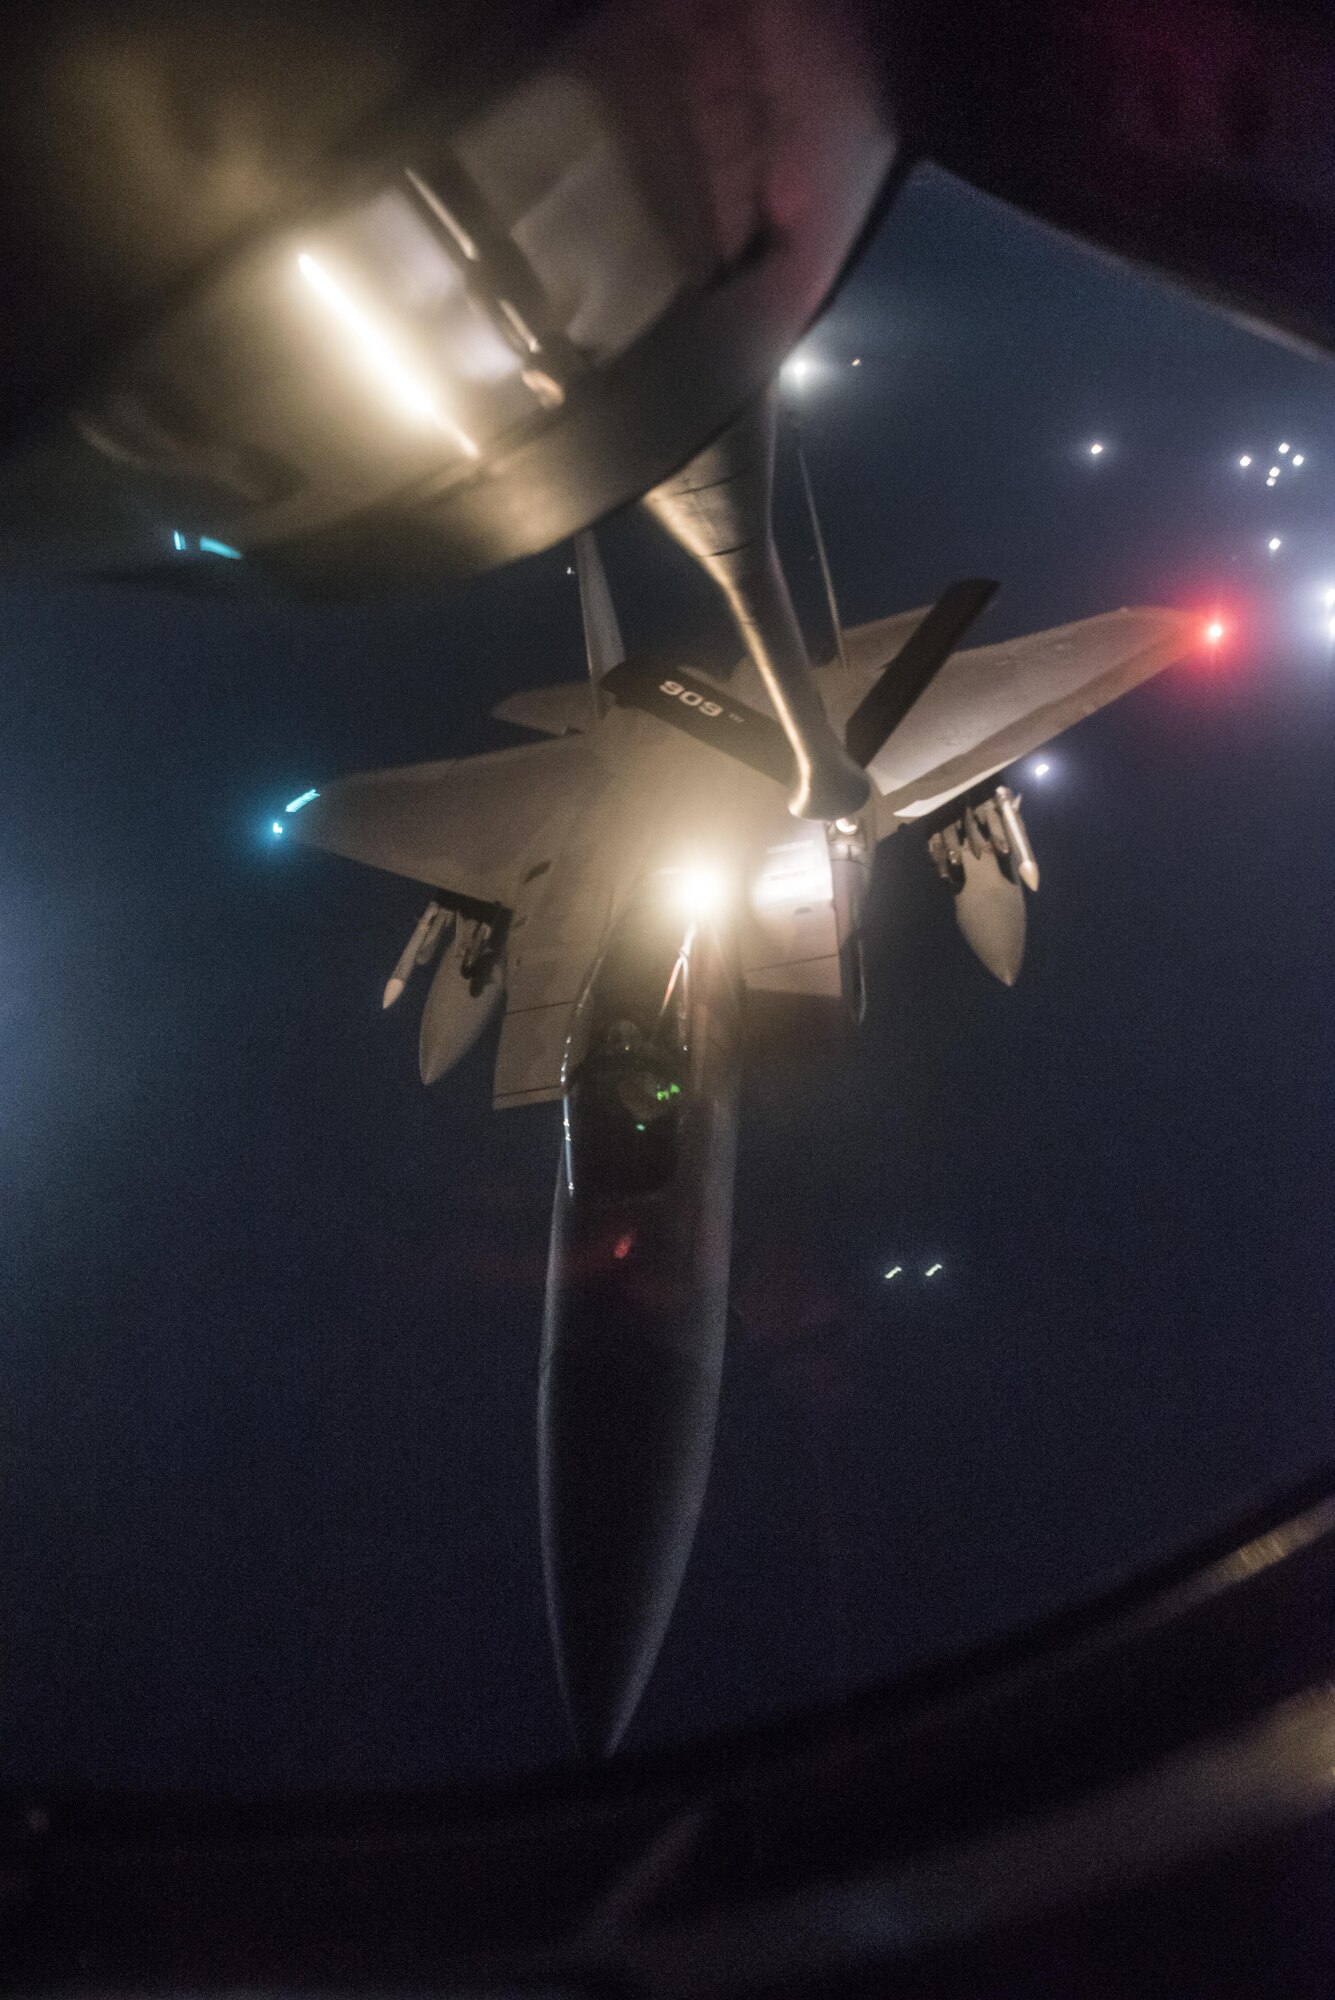 U.S. Bombers, Fighters Fly in International Airspace East of North Korea